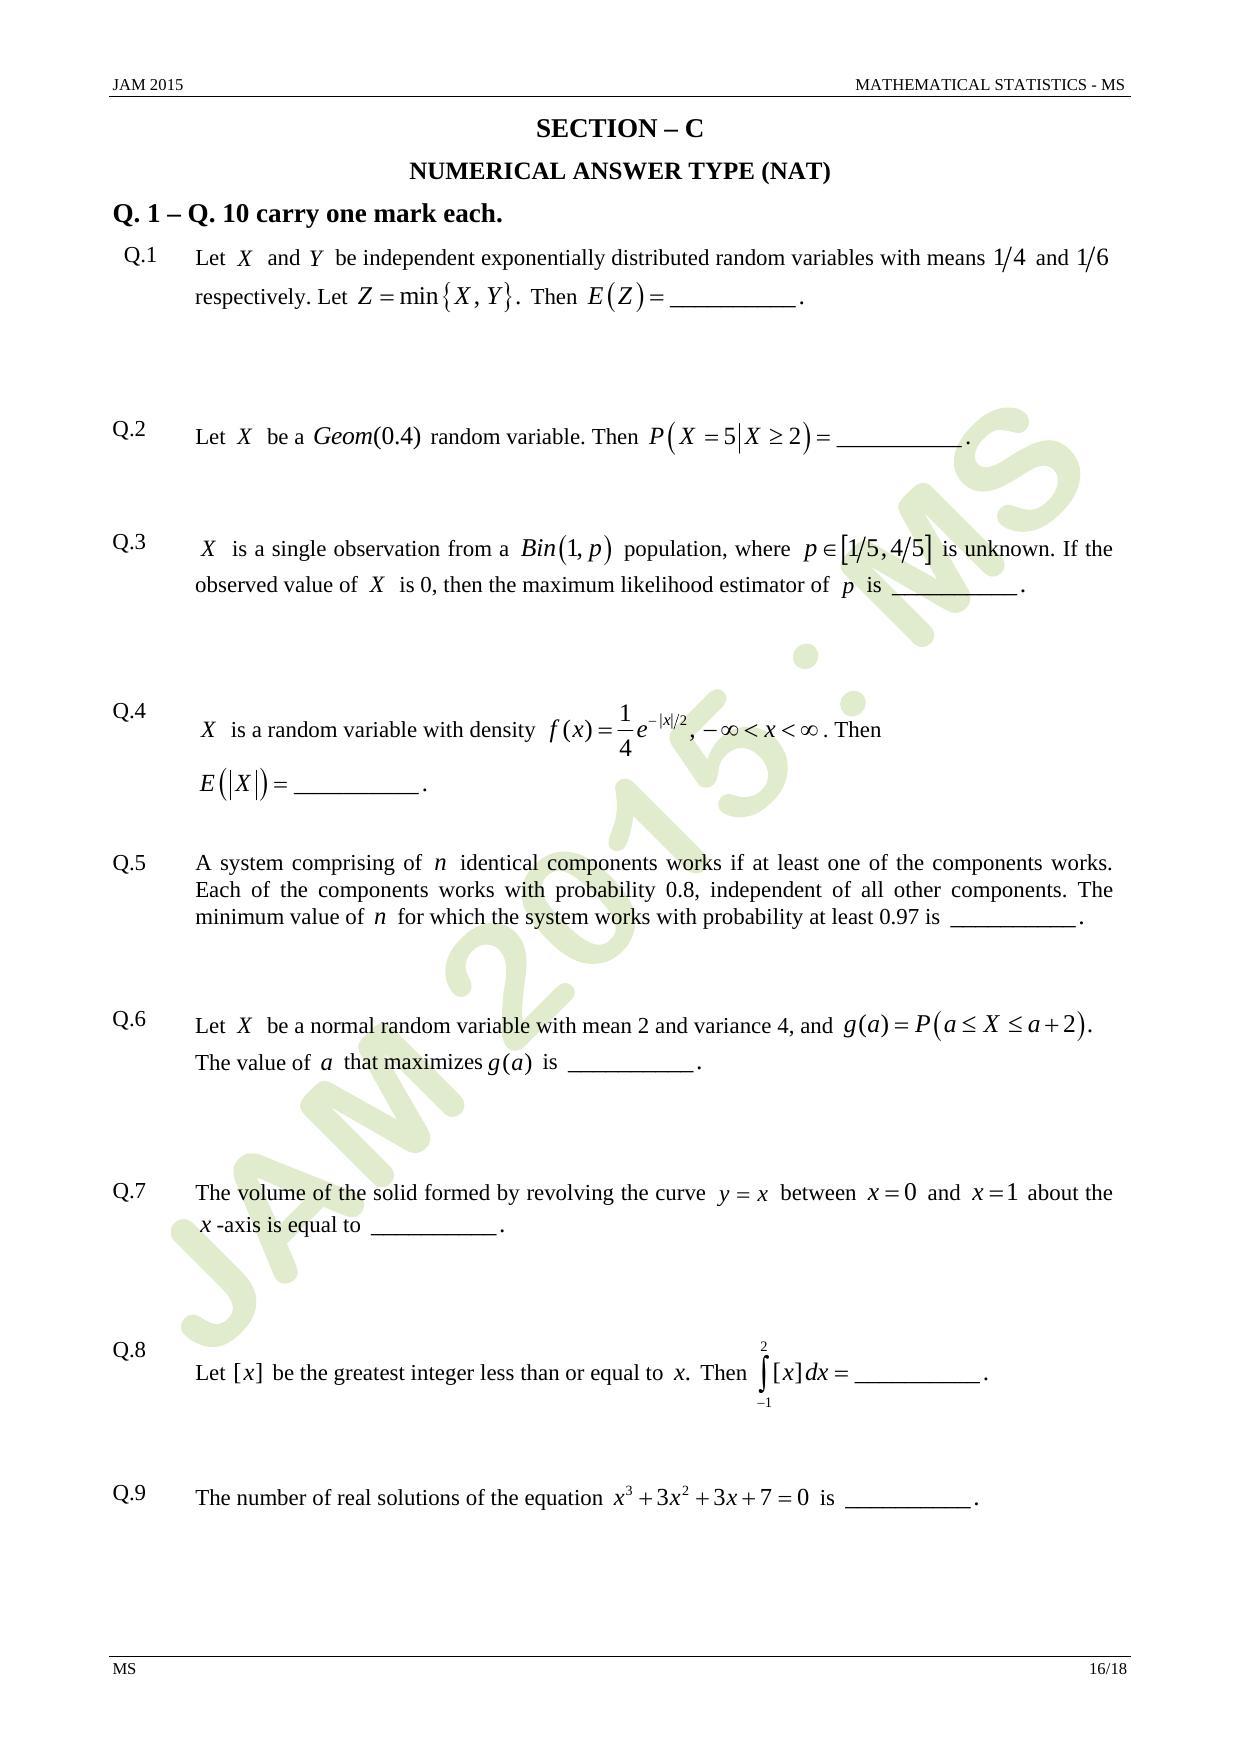 JAM 2015: MS Question Paper - Page 16